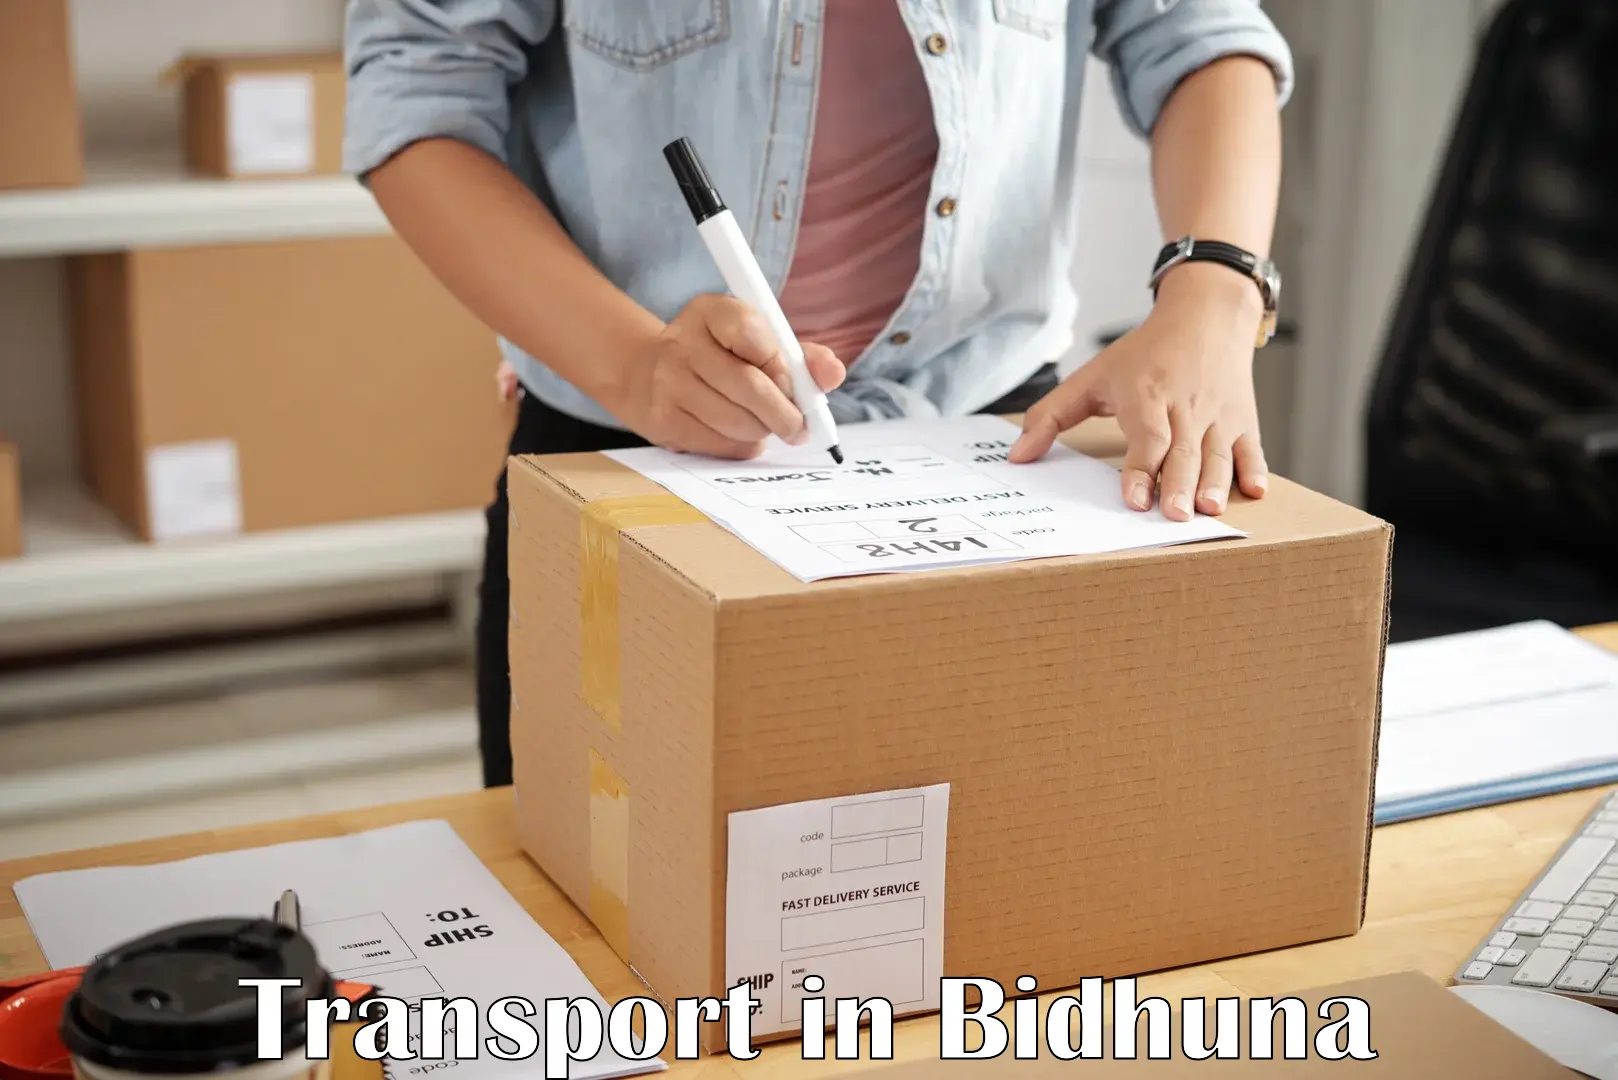 Online transport booking in Bidhuna